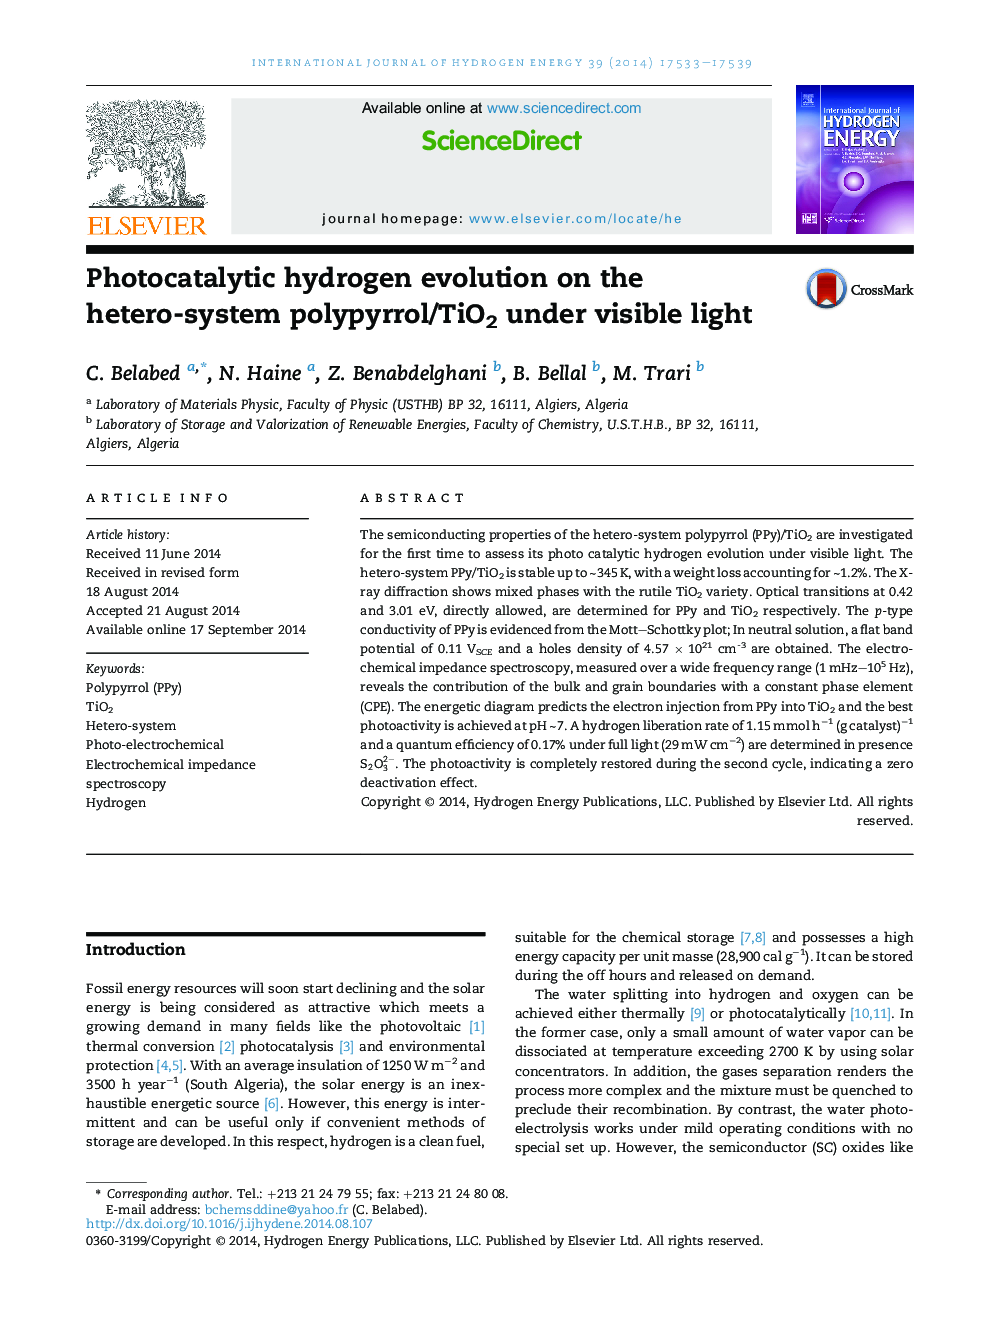 Photocatalytic hydrogen evolution on the hetero-system polypyrrol/TiO2 under visible light